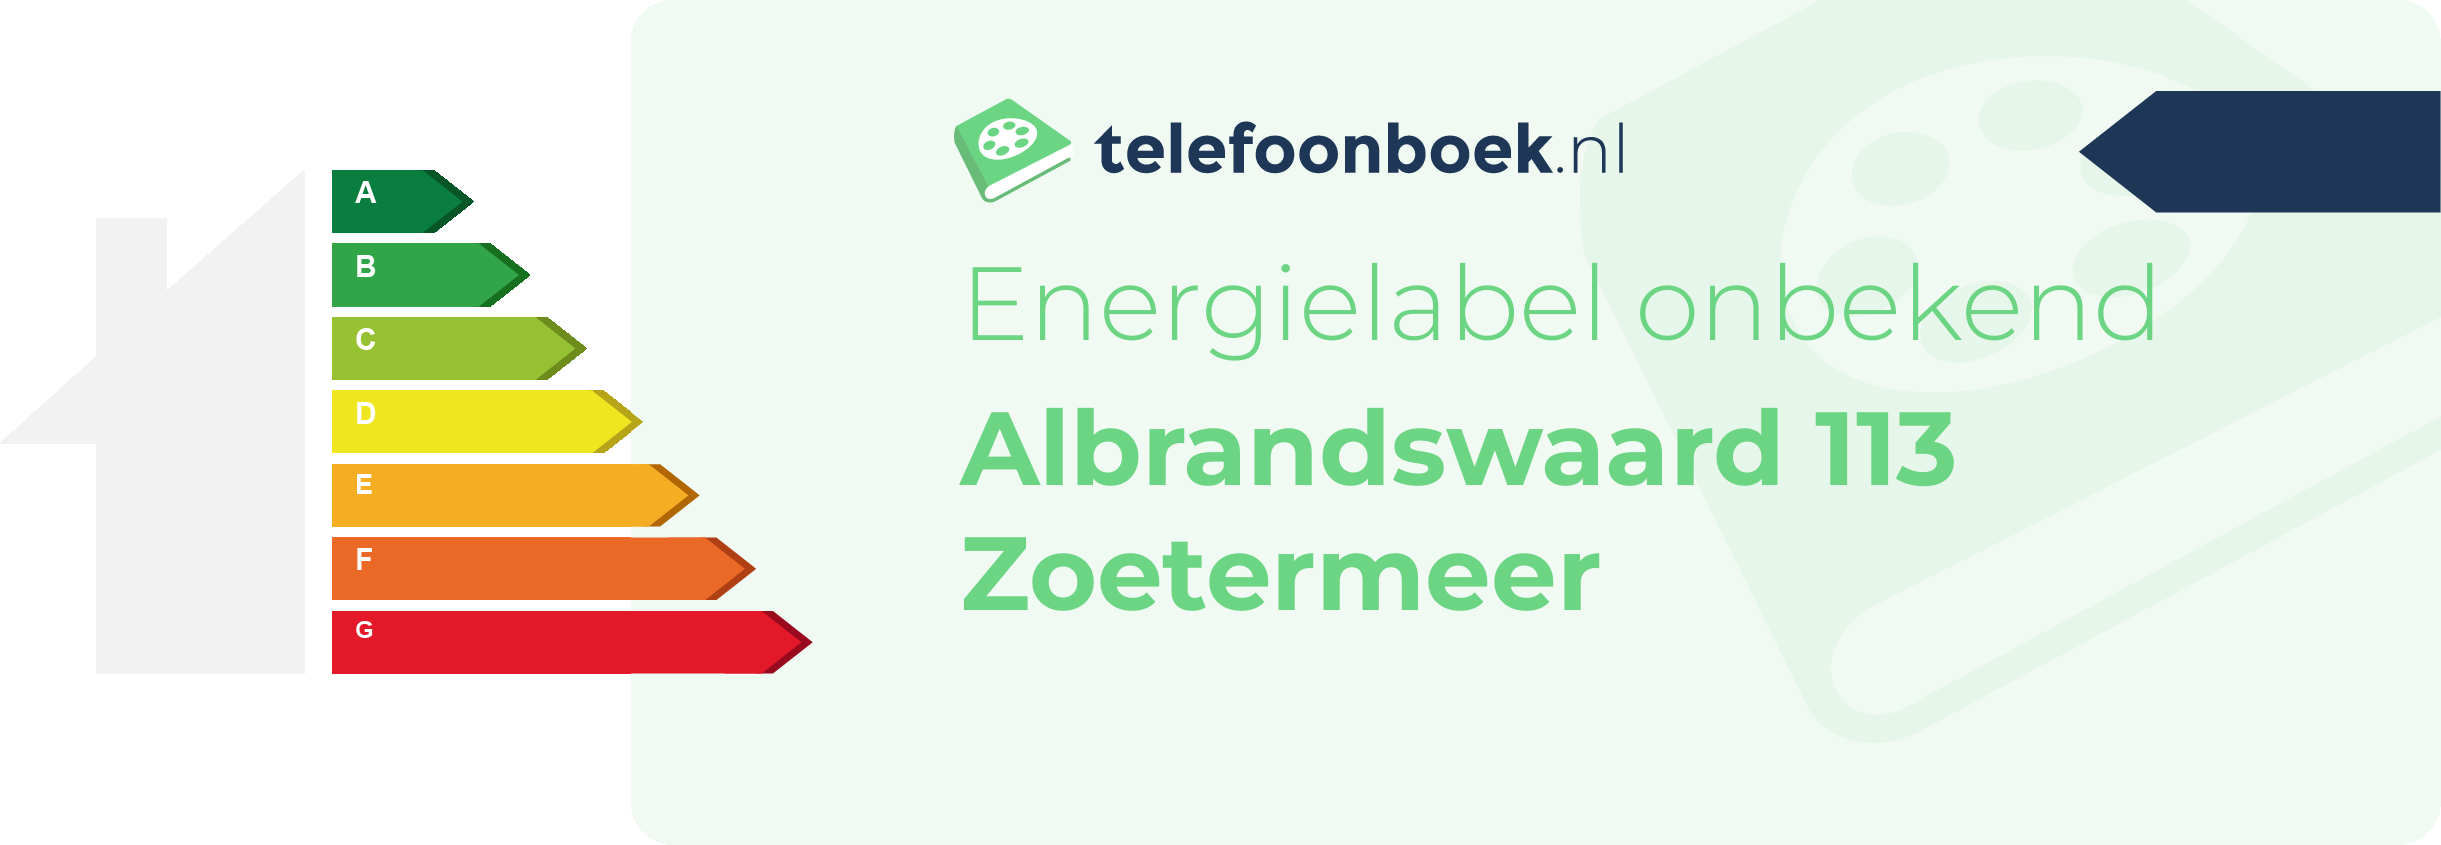 Energielabel Albrandswaard 113 Zoetermeer